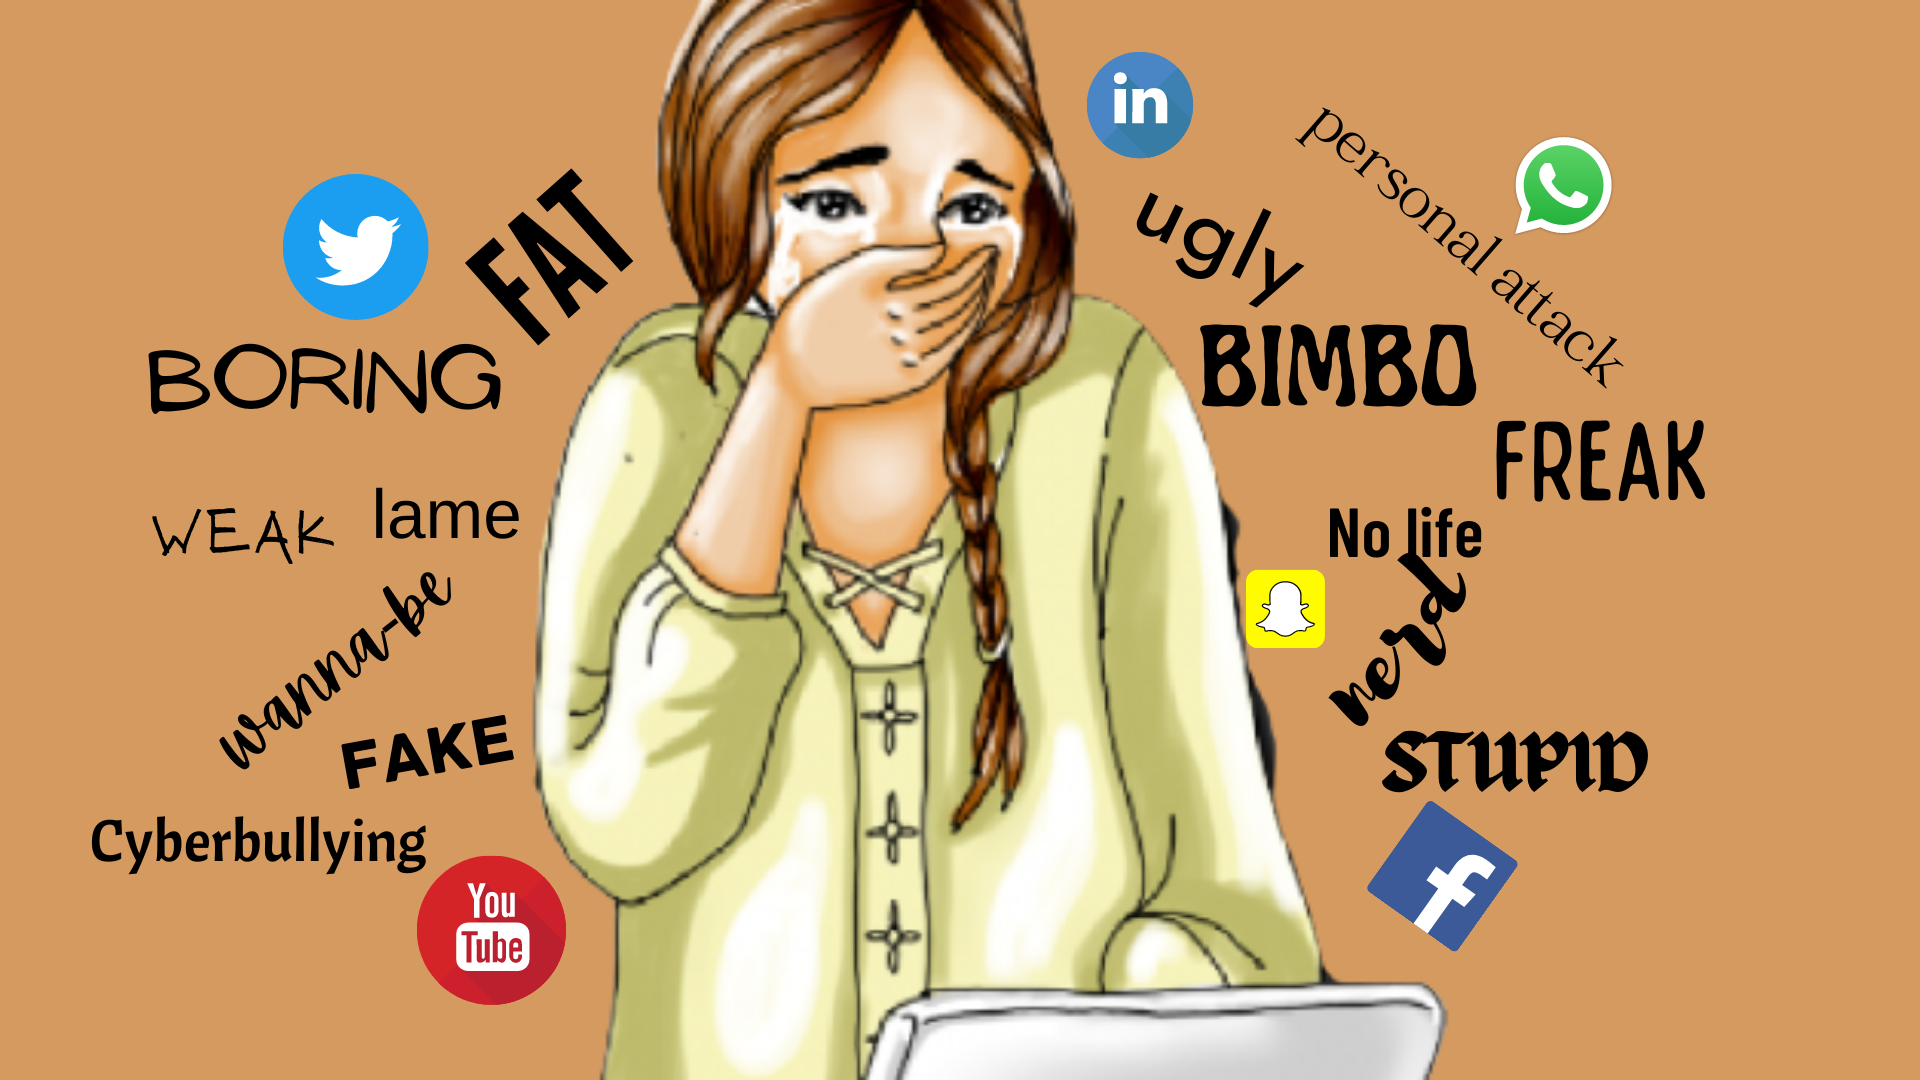 cyberbullying in teens, Social media